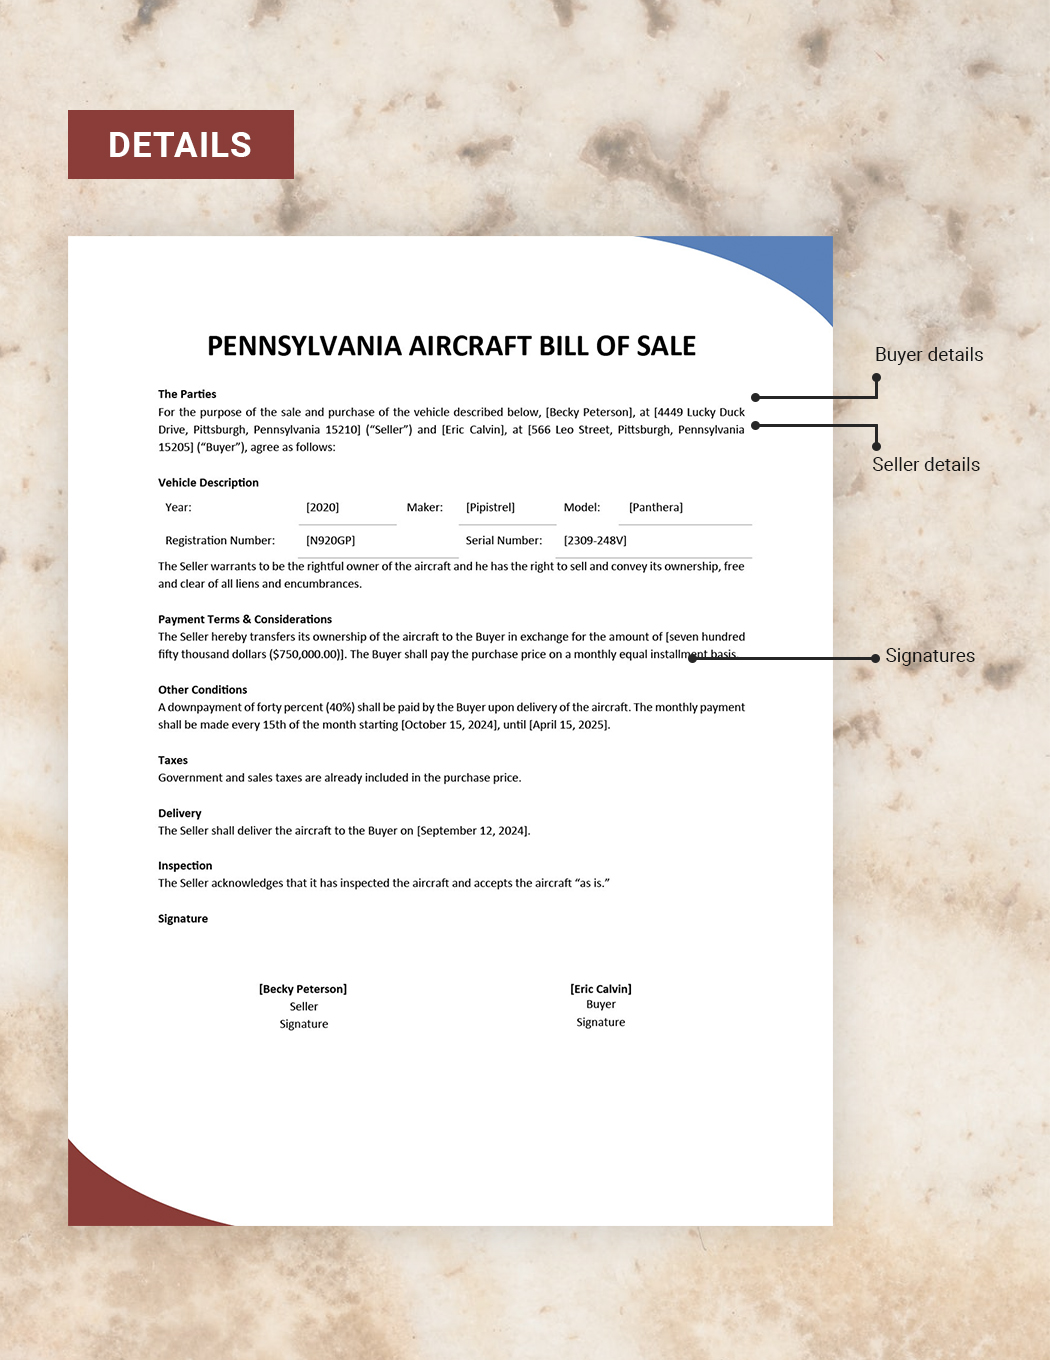 Pennsylvania Aircraft/Airplane Bill of Sale Template